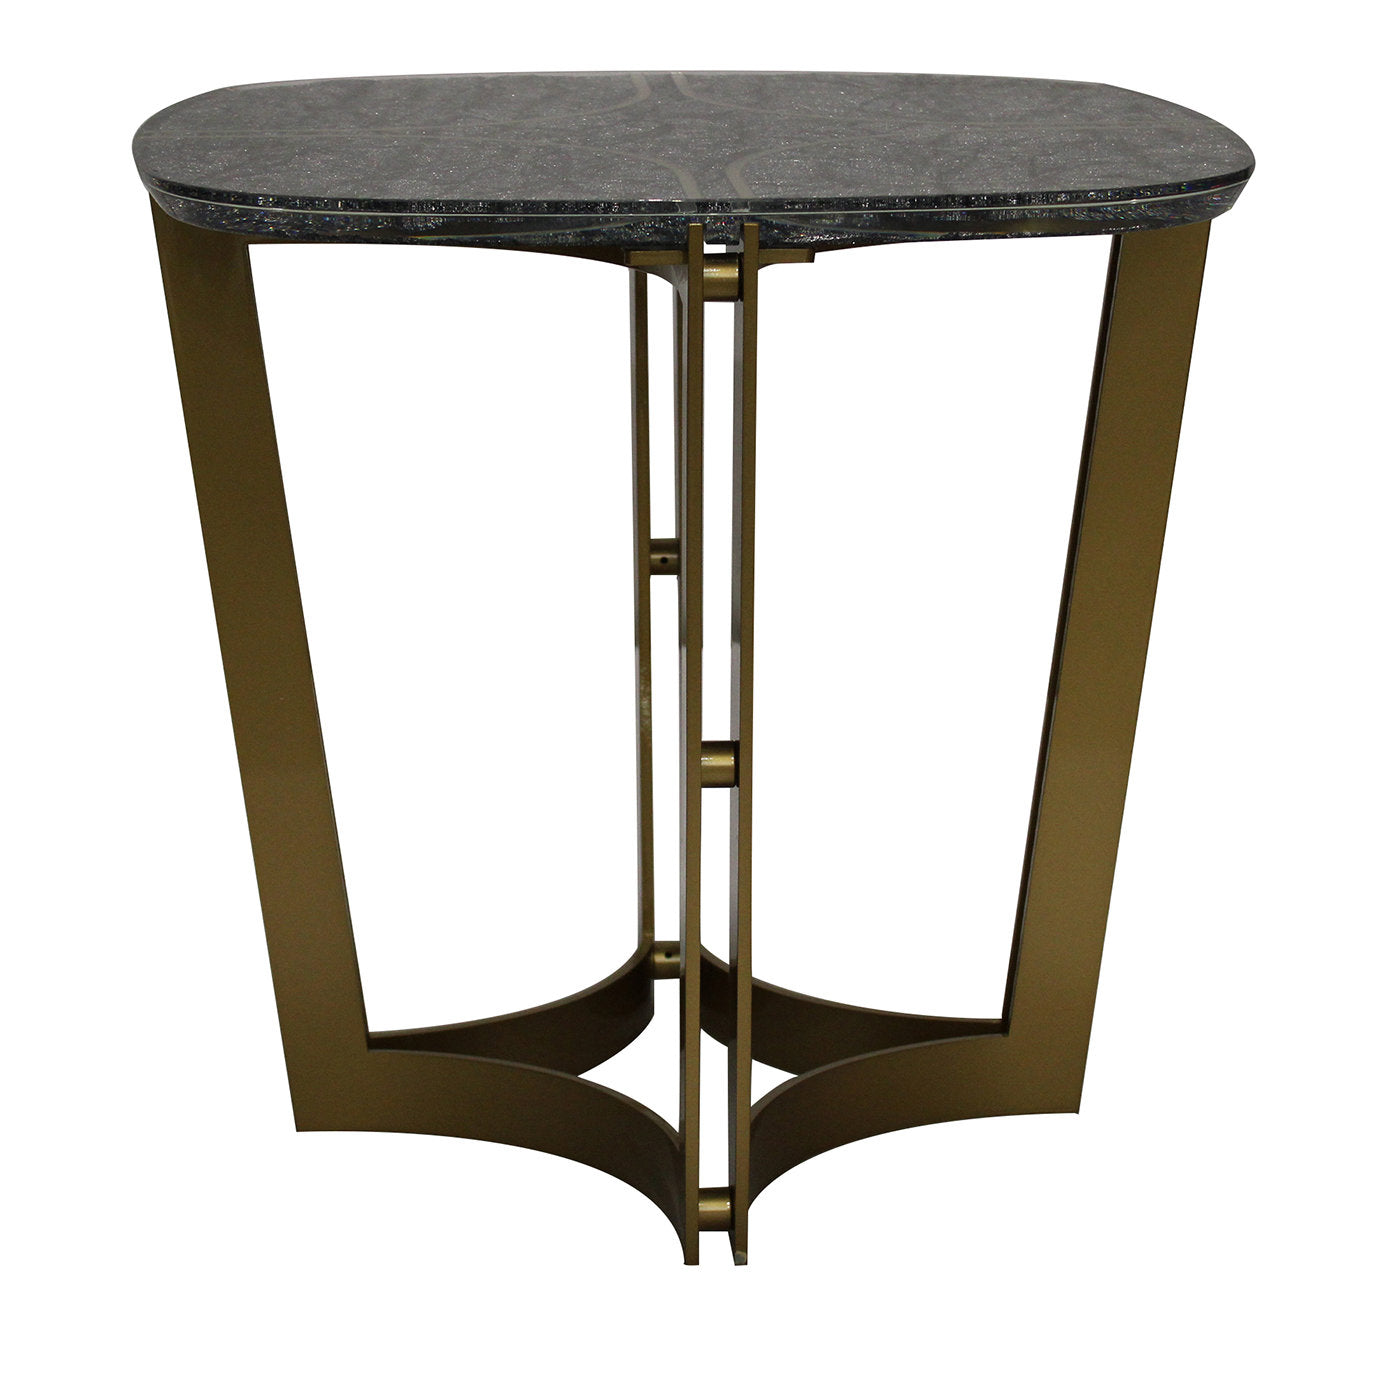 Rossellini Silver coffee table tall - Alternative view 1